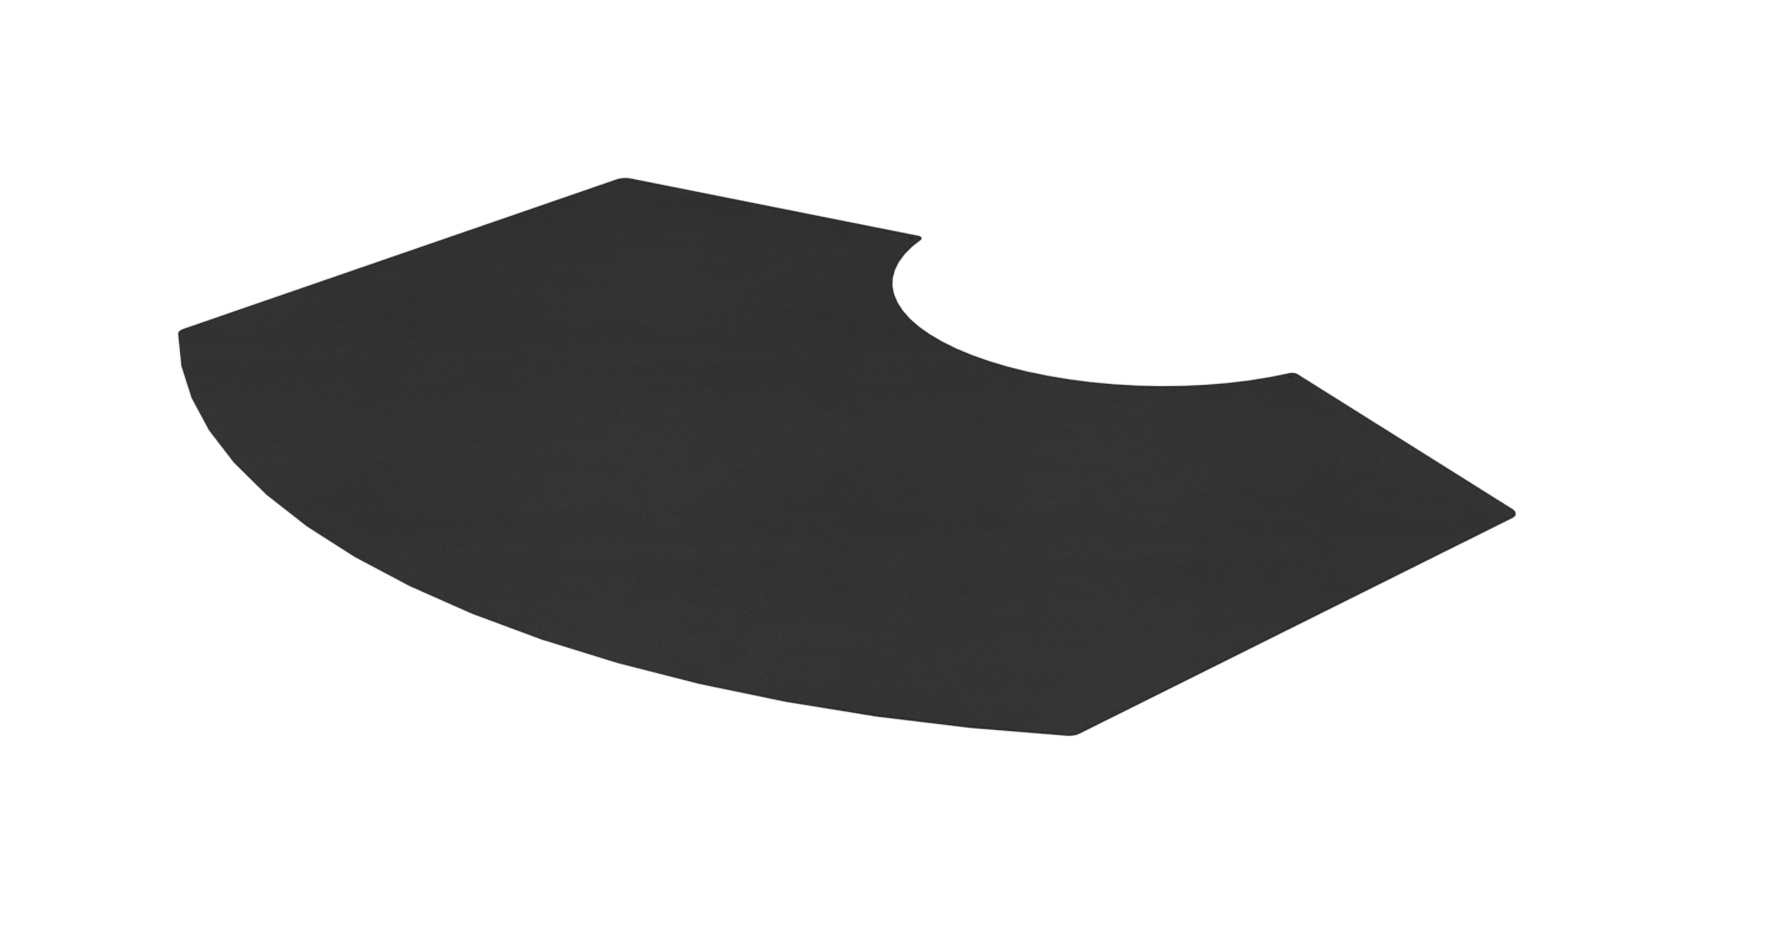 Vorlegeplatte Stahl schwarz Nordpeis Kaminofen ORIGO, ORIGO EXCLUSIVE